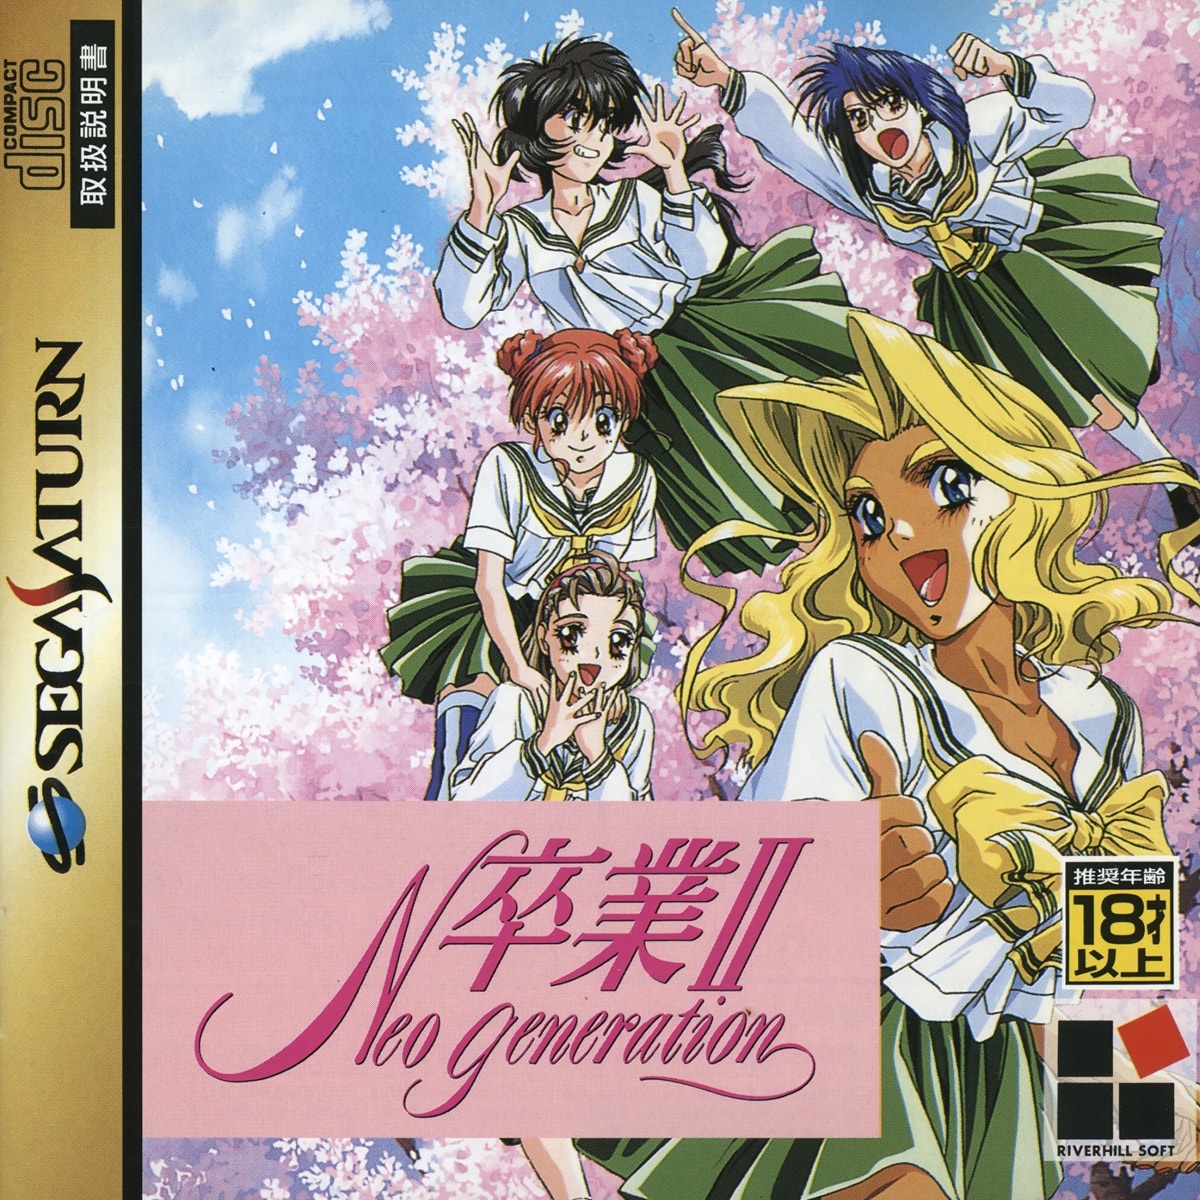 Capa do jogo Sotsugyou II Neo Generation